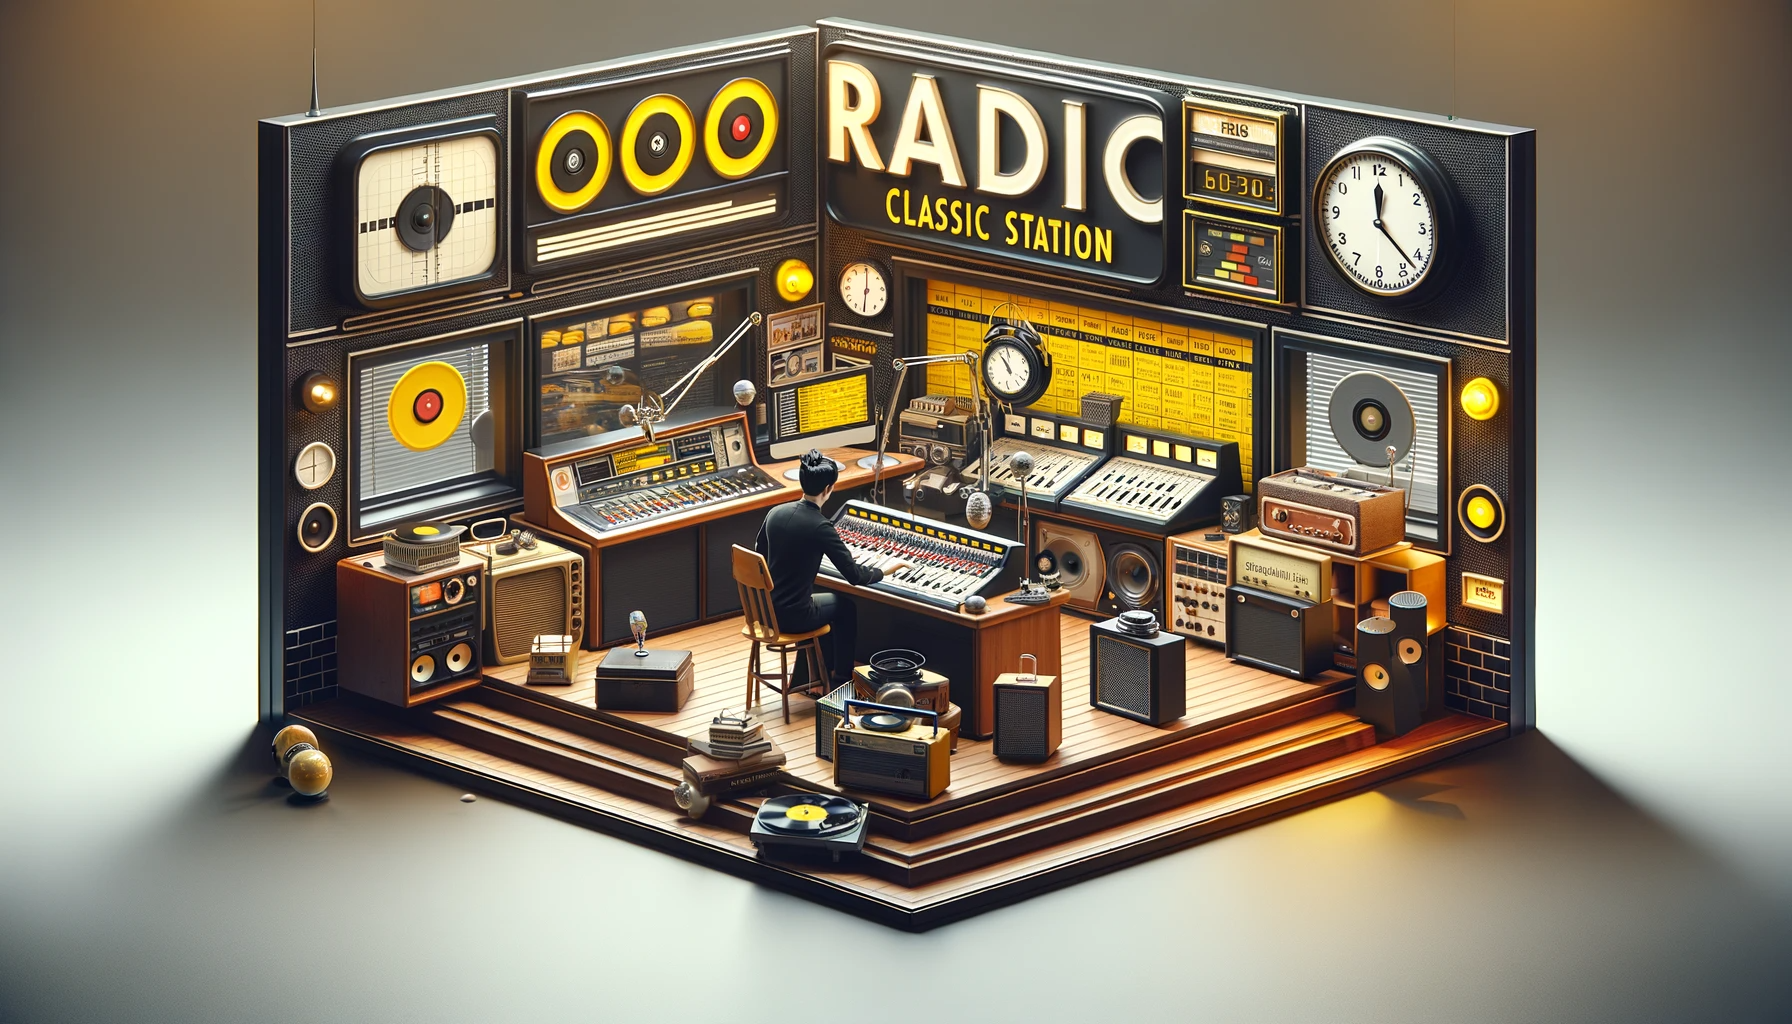 radio classic hits station for broadcasting mass communication